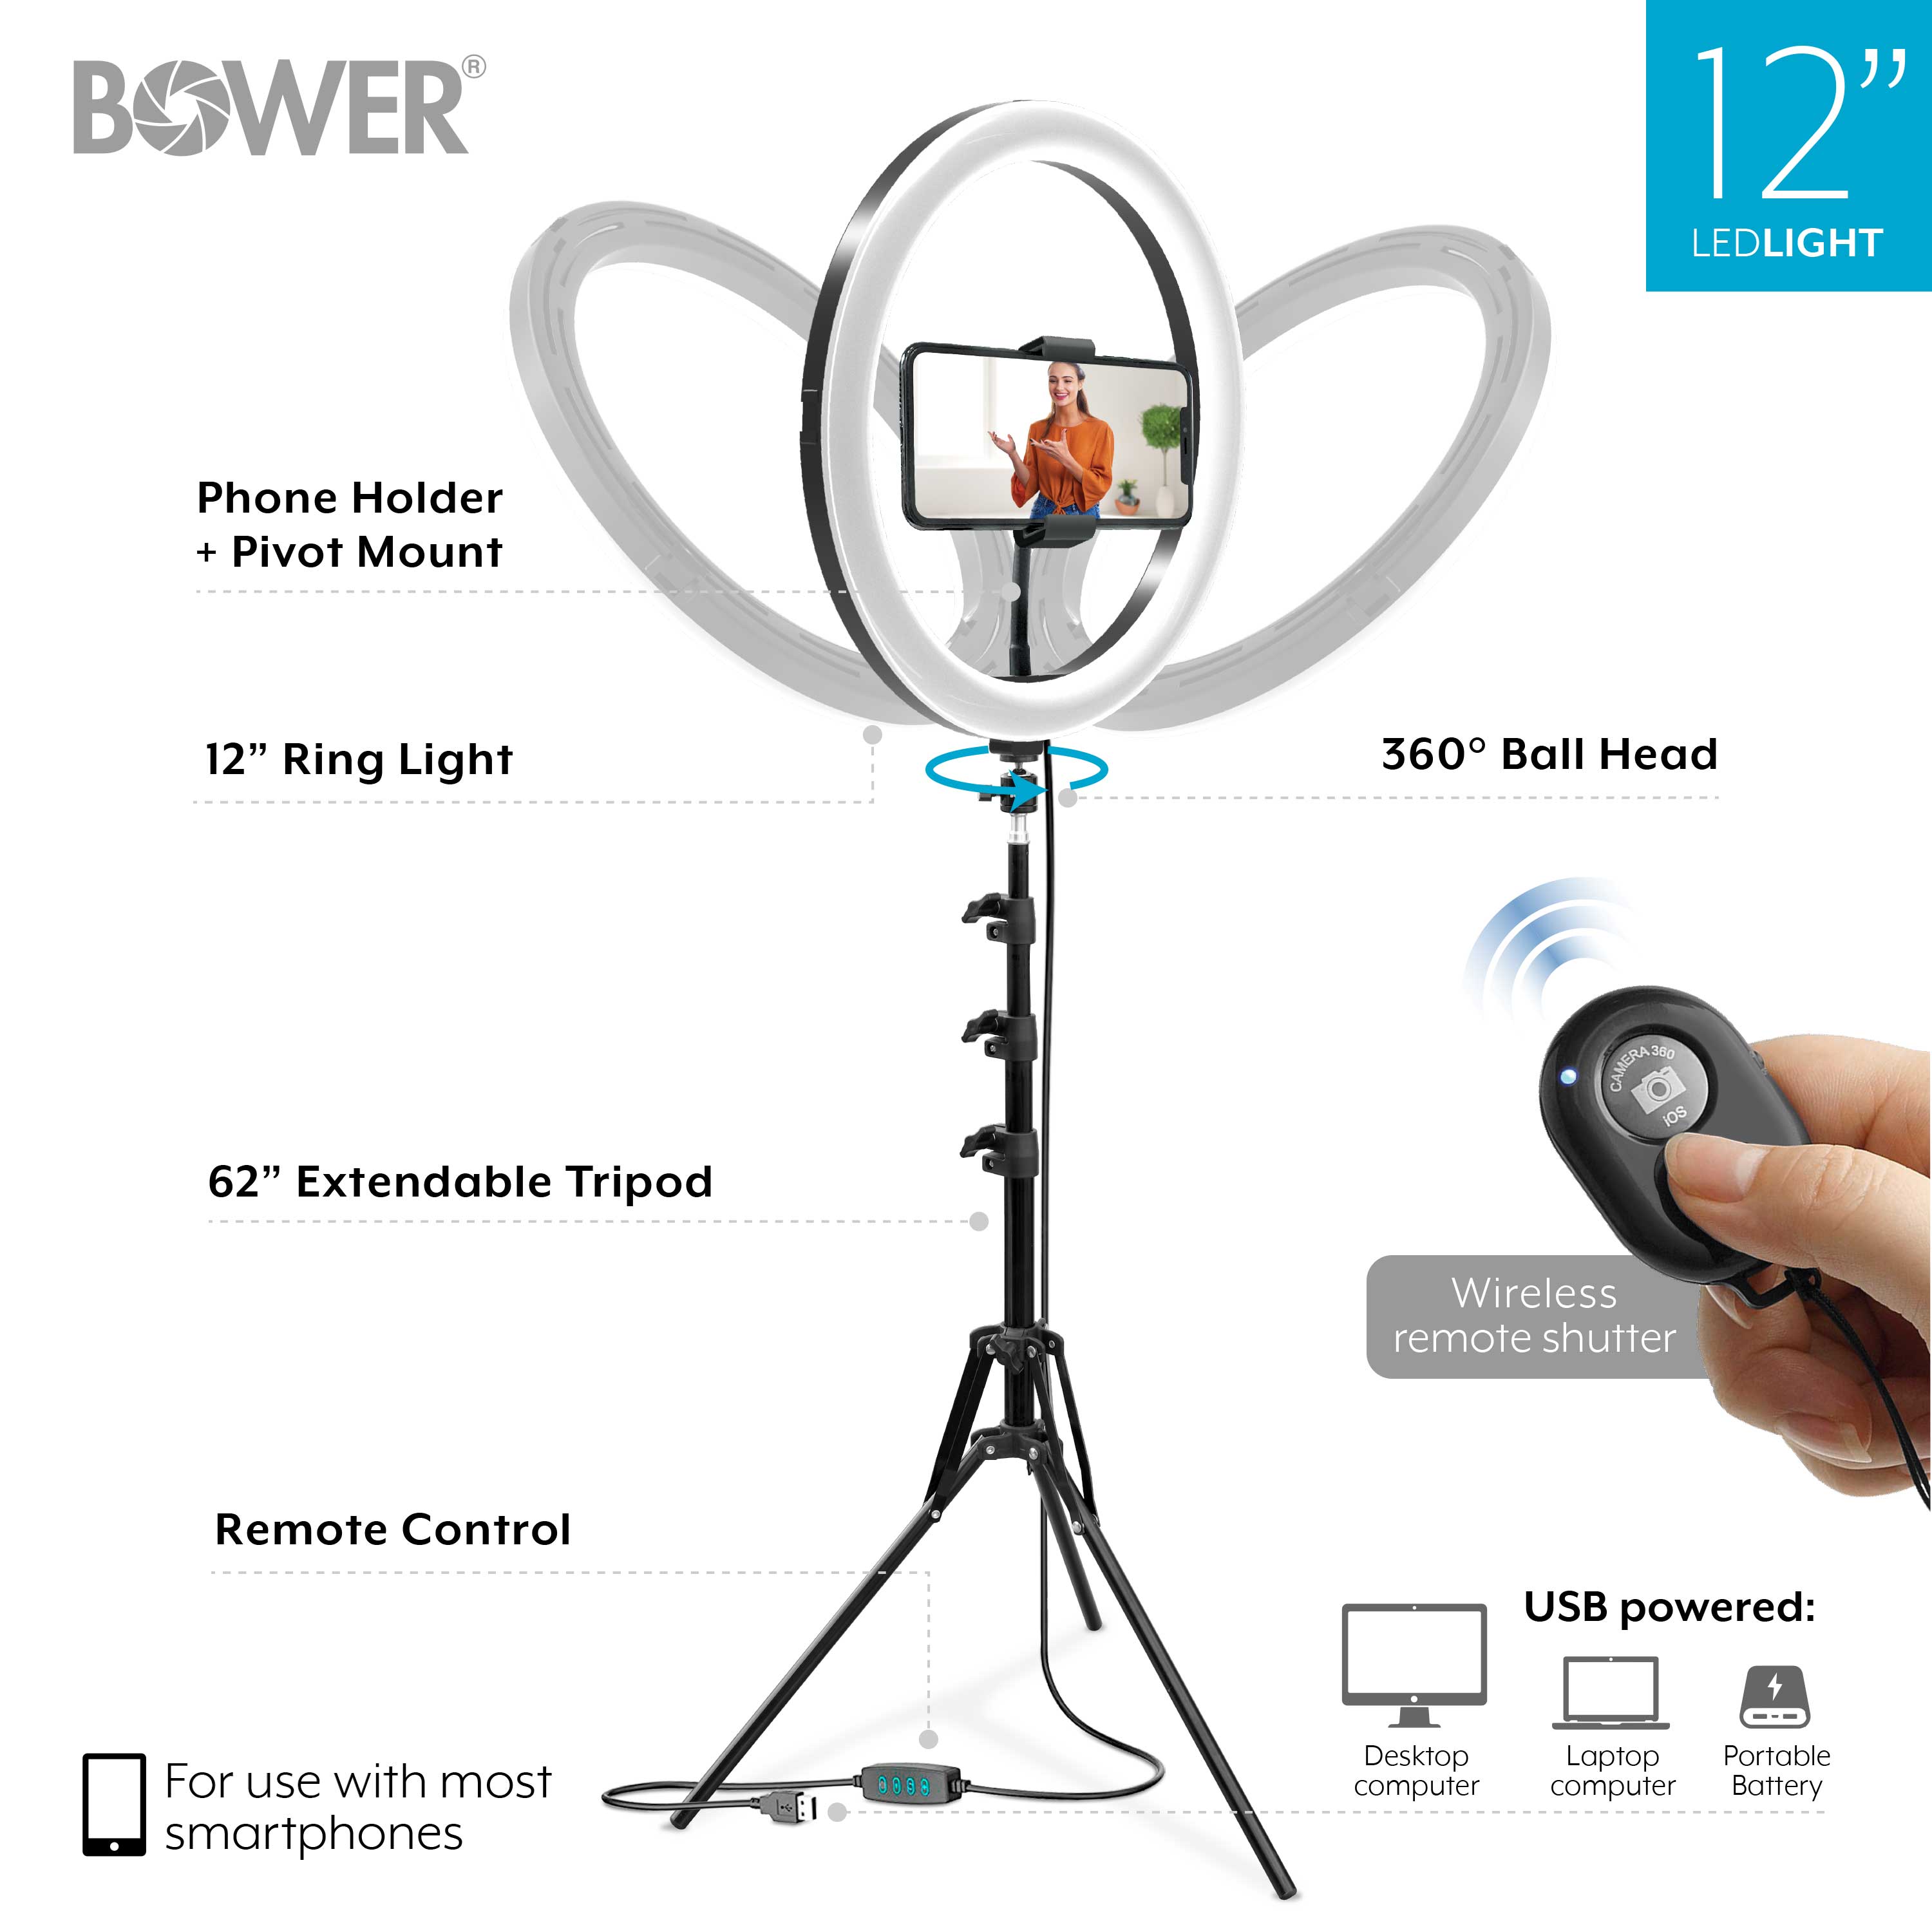 Bower 12” Studio Light USB Power Ball-Head Mount 62" Adjustable Tripod 3 Colors 10 Brightness Levels In-Line Remote - image 3 of 7